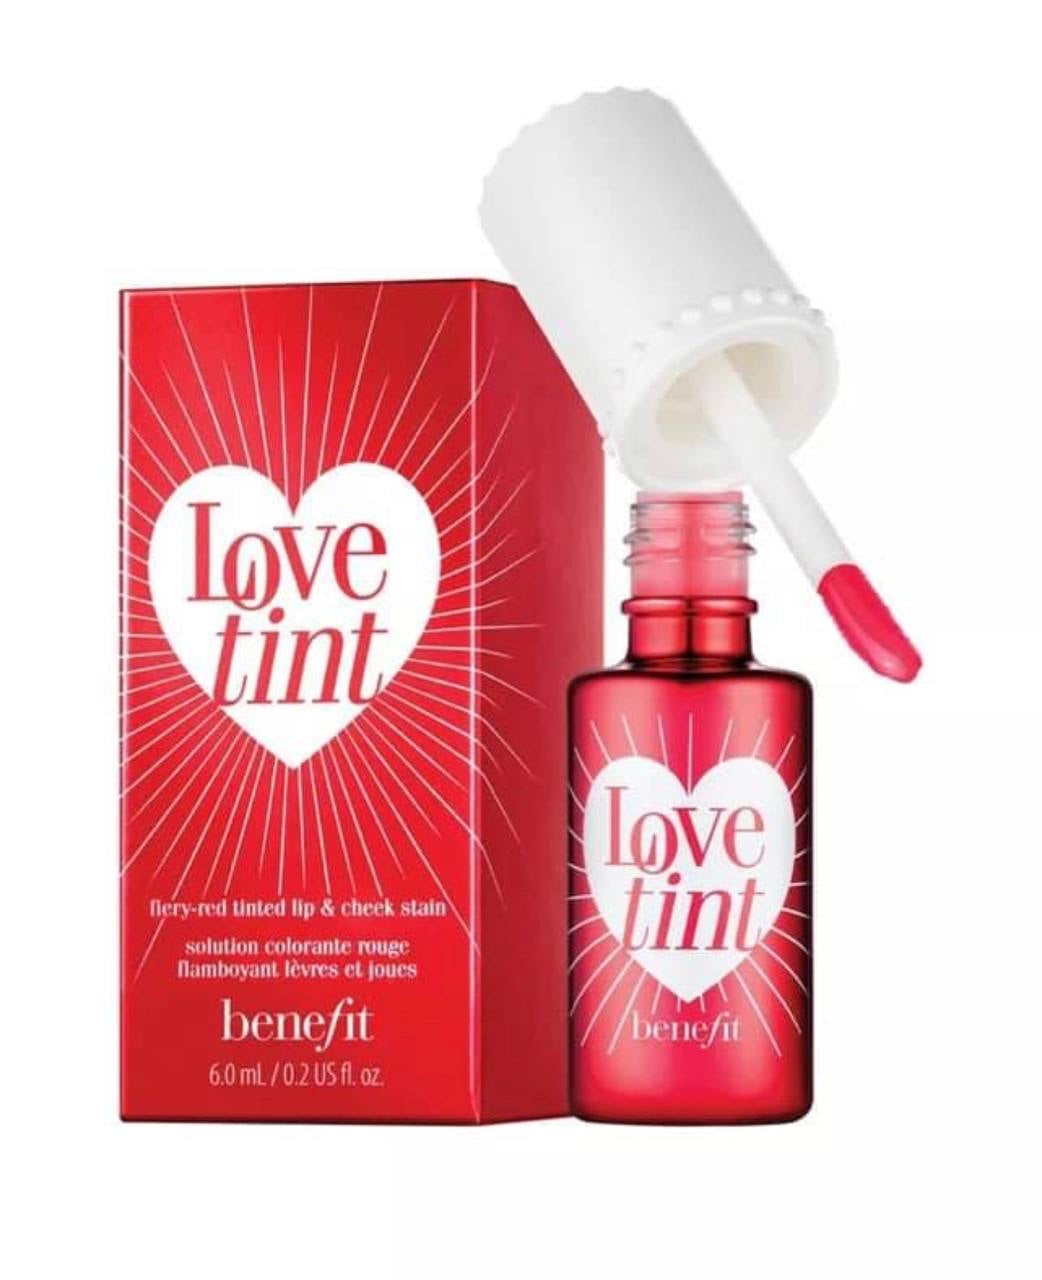 Benefit love tint